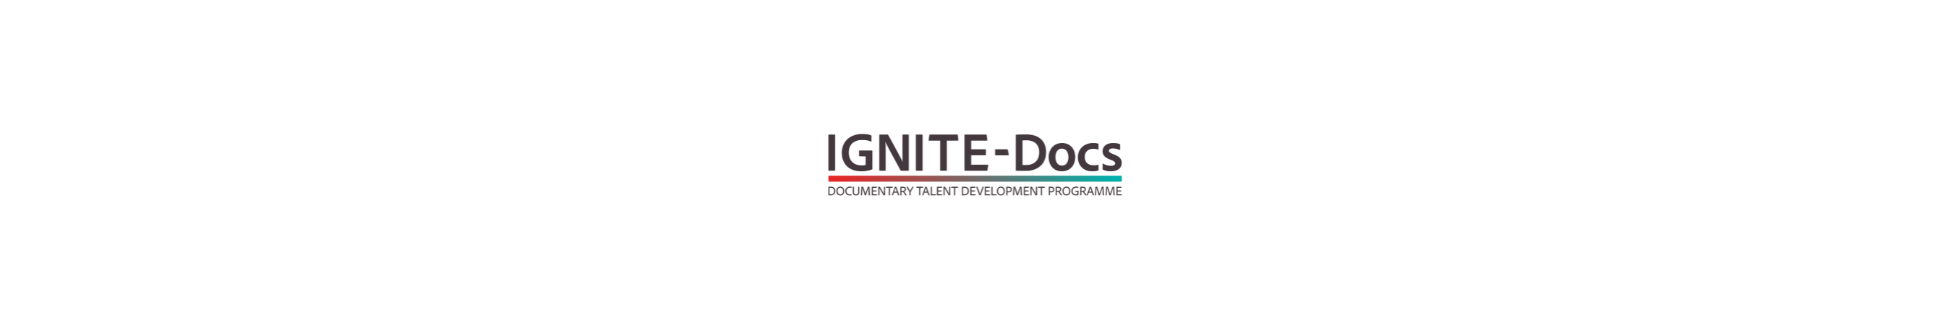 IGNITE-Docs logo